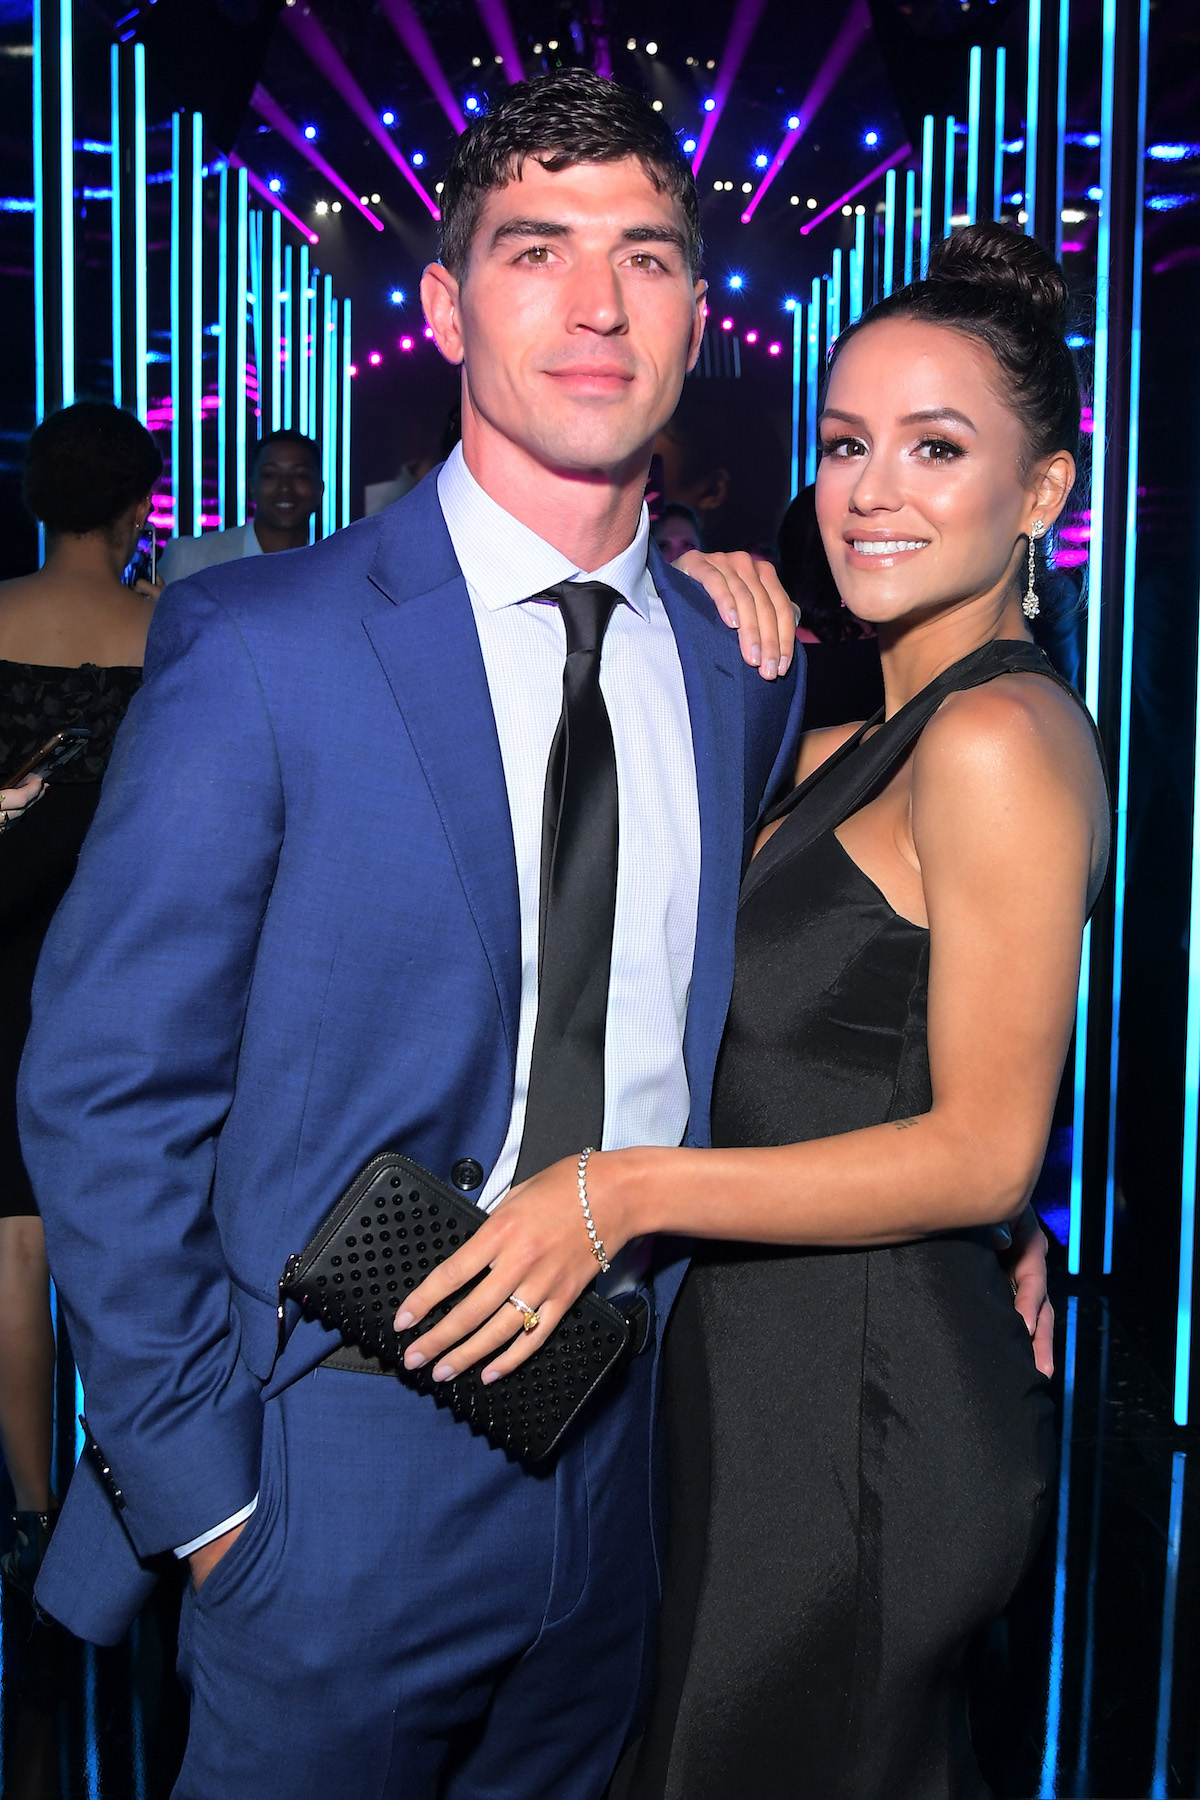 Jessica Graf and husband Cody Nickson wear formal black attire at an event.